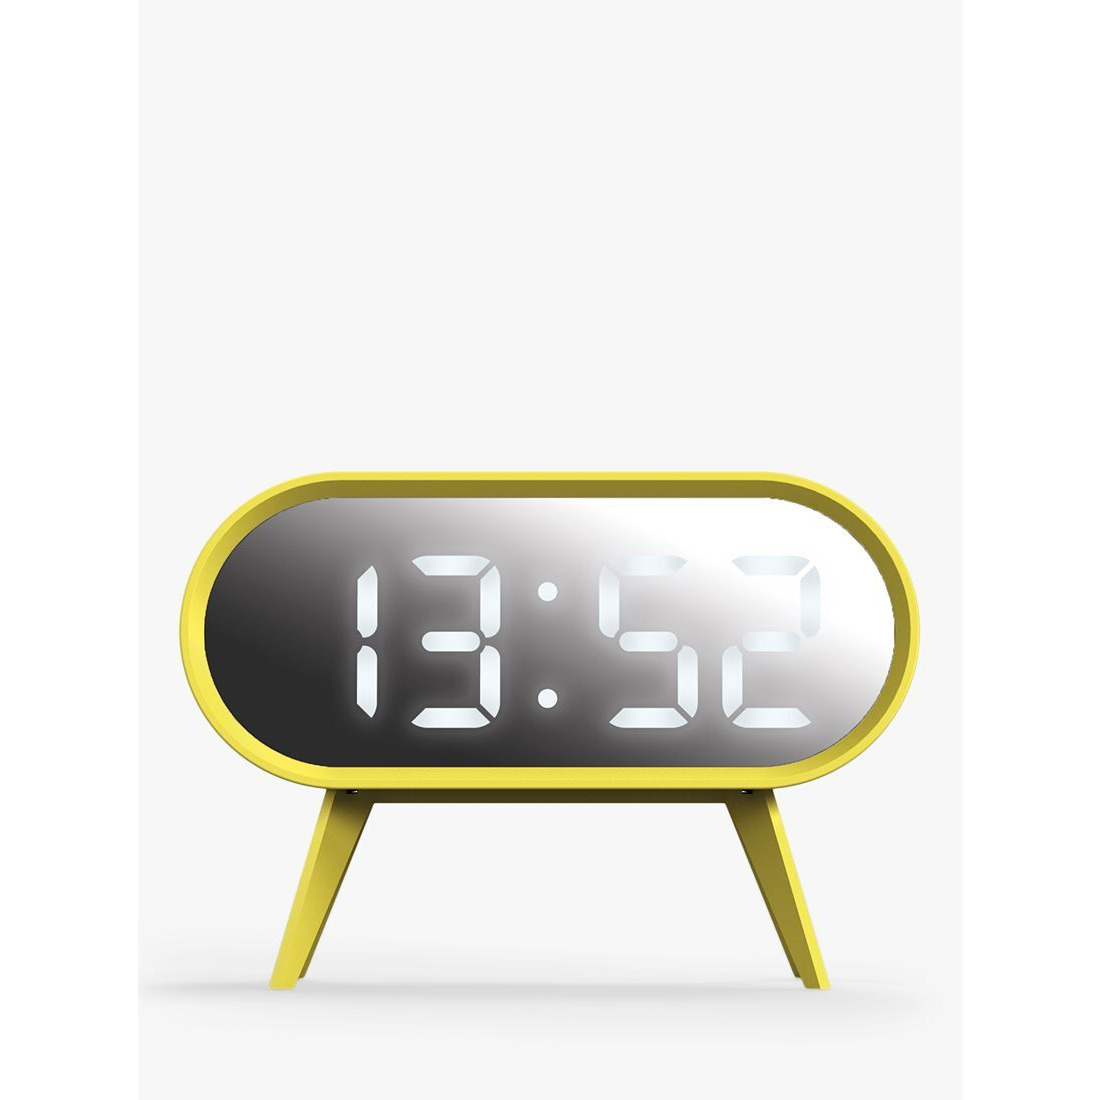 Space Hotel Cyborg LED Digital Alarm Clock - image 1